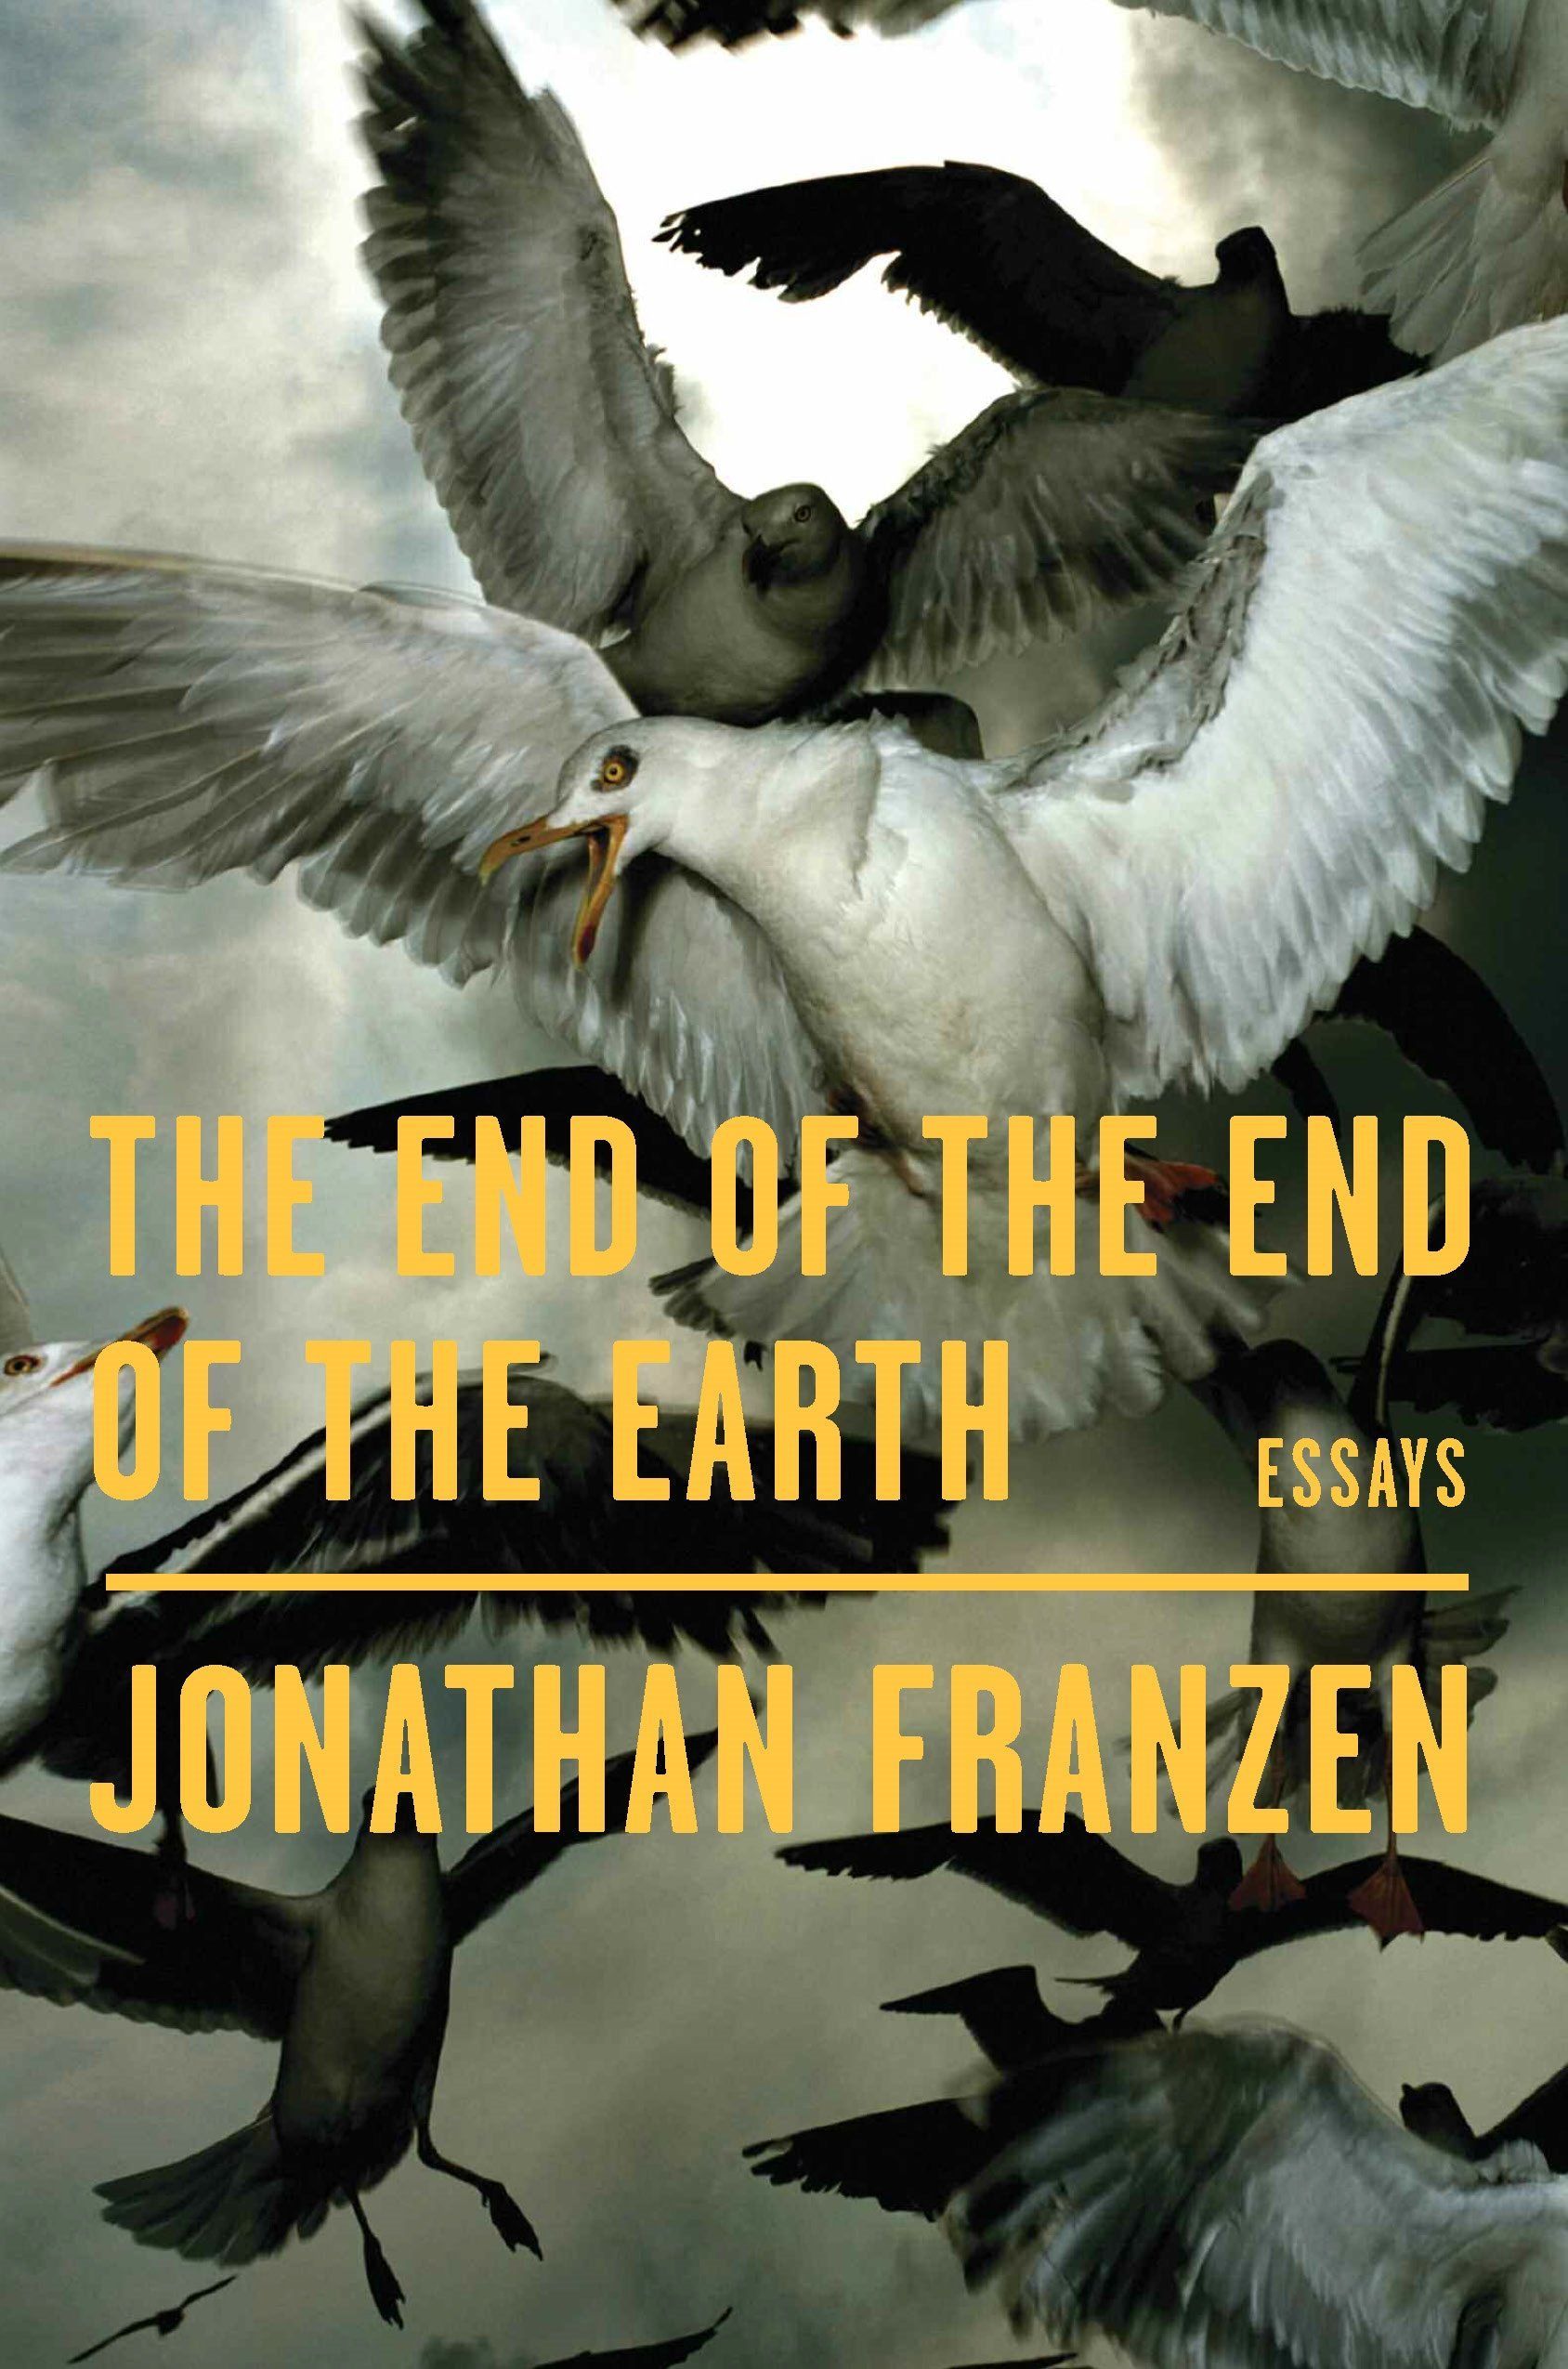 Bird’s Eye View: Jonathan Franzen Looks Down on Climate Activism